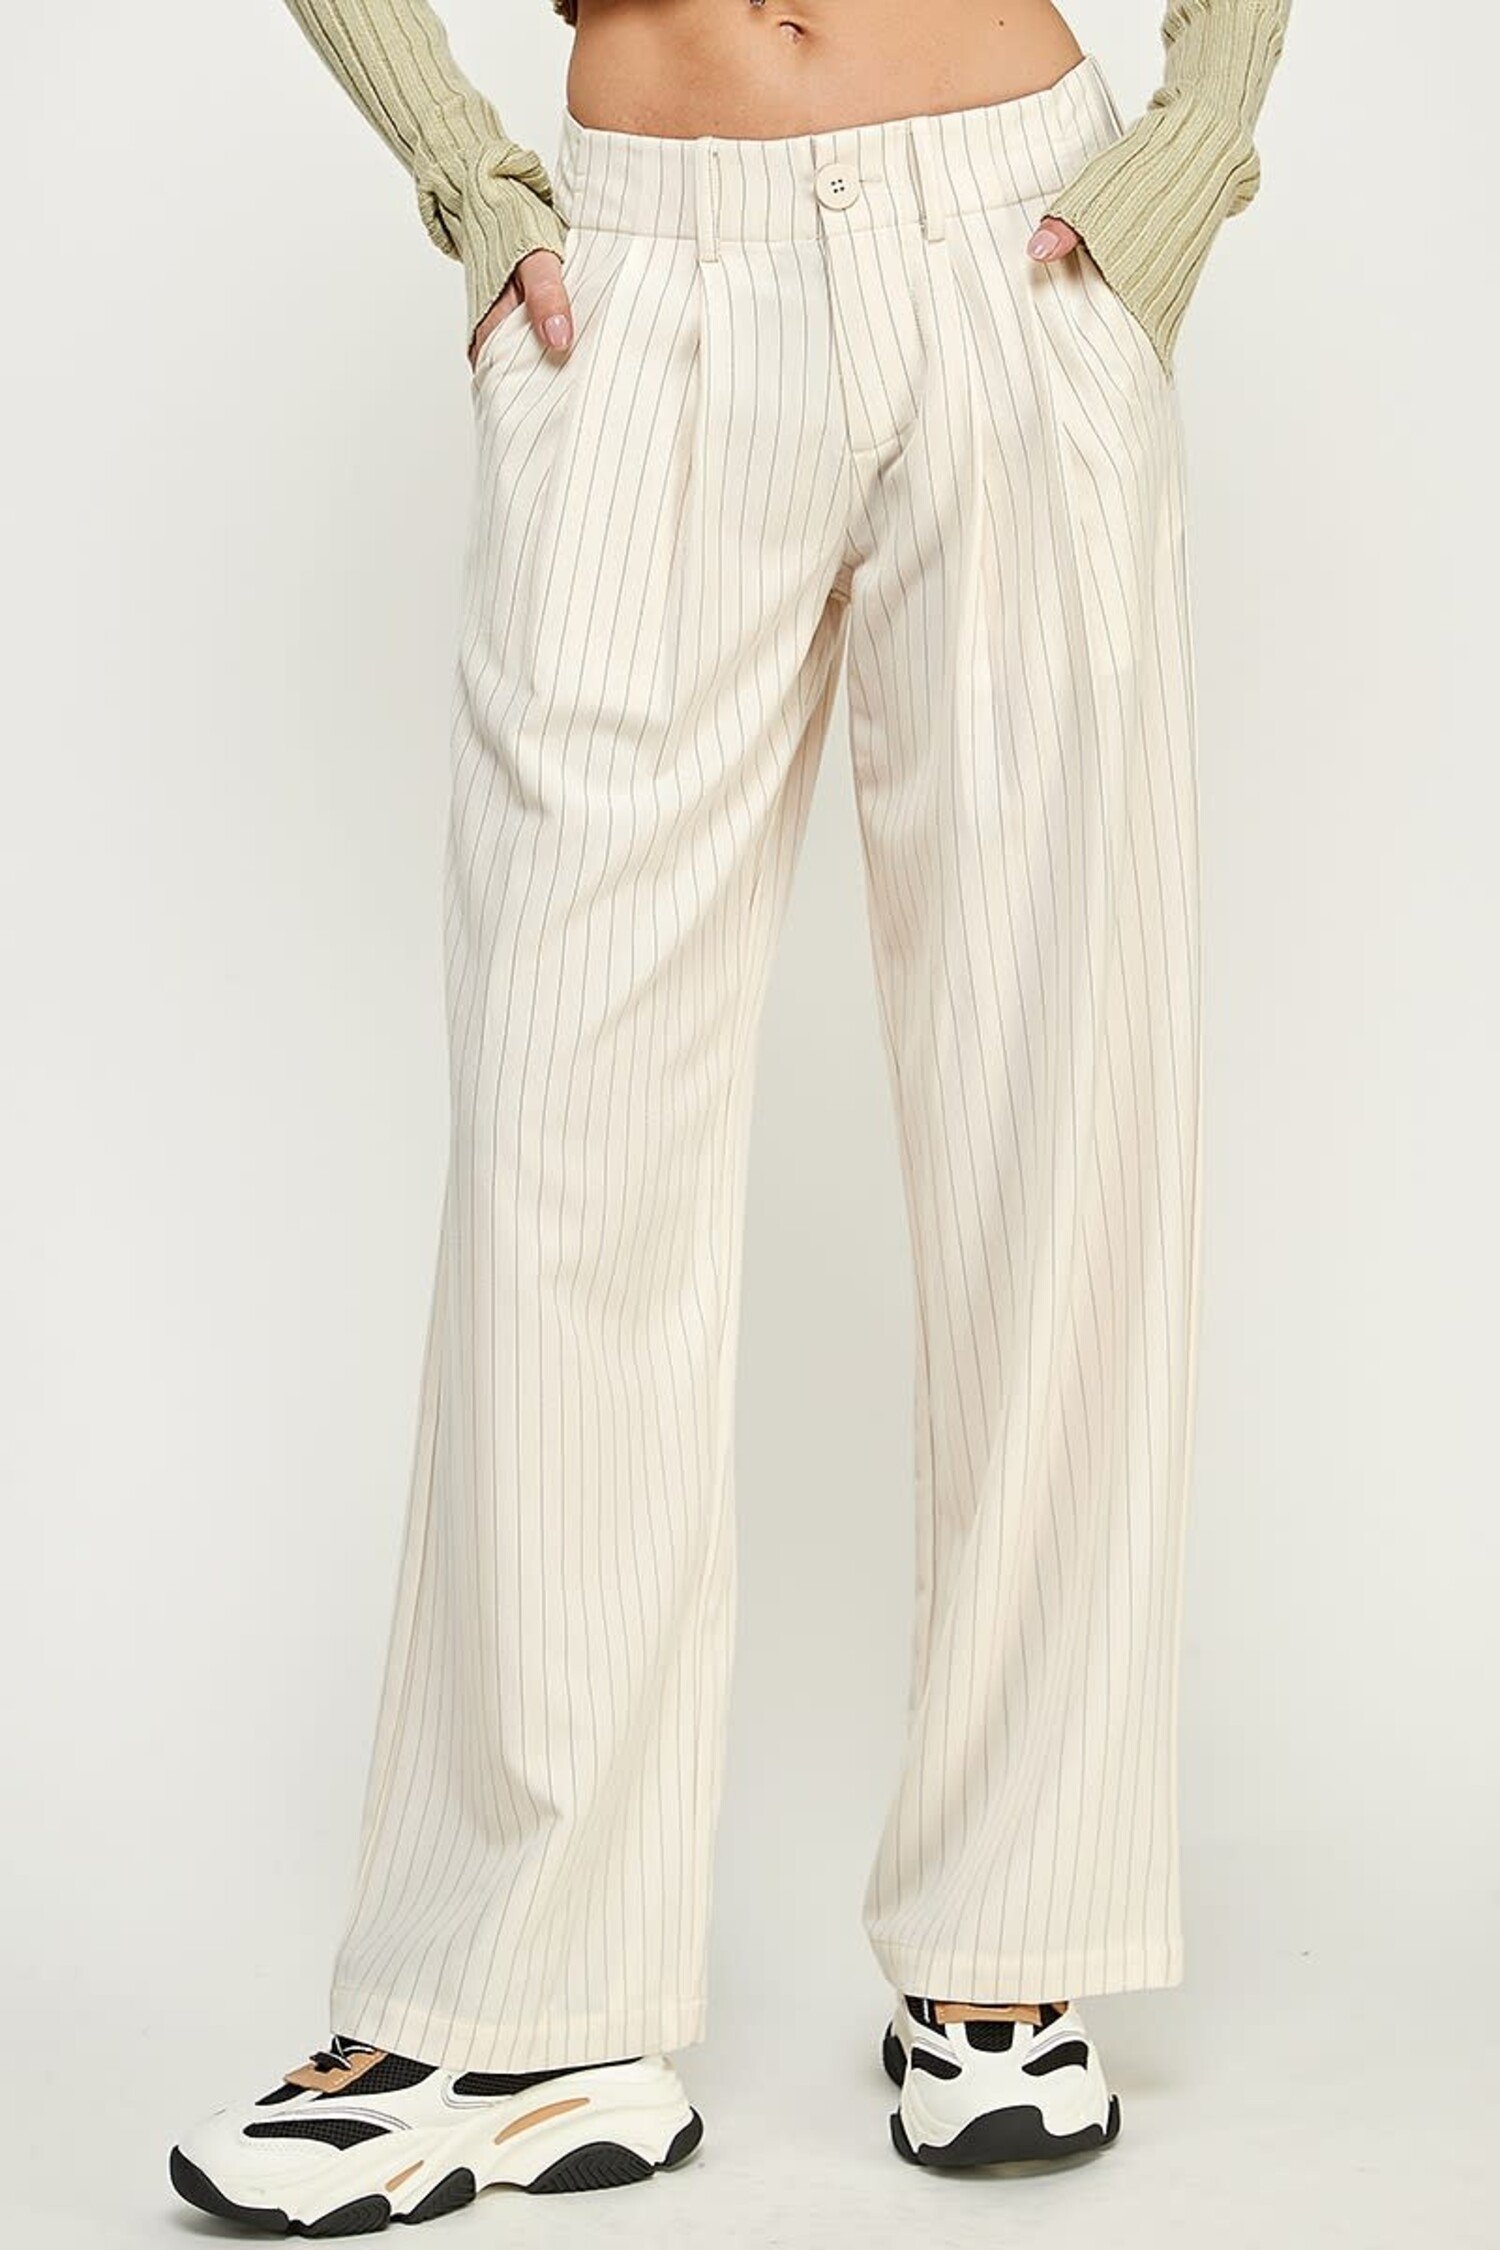 Orlando Men's Striped Pants, Drawstring Trousers | Capthatt Mens Clothing &  Accessories